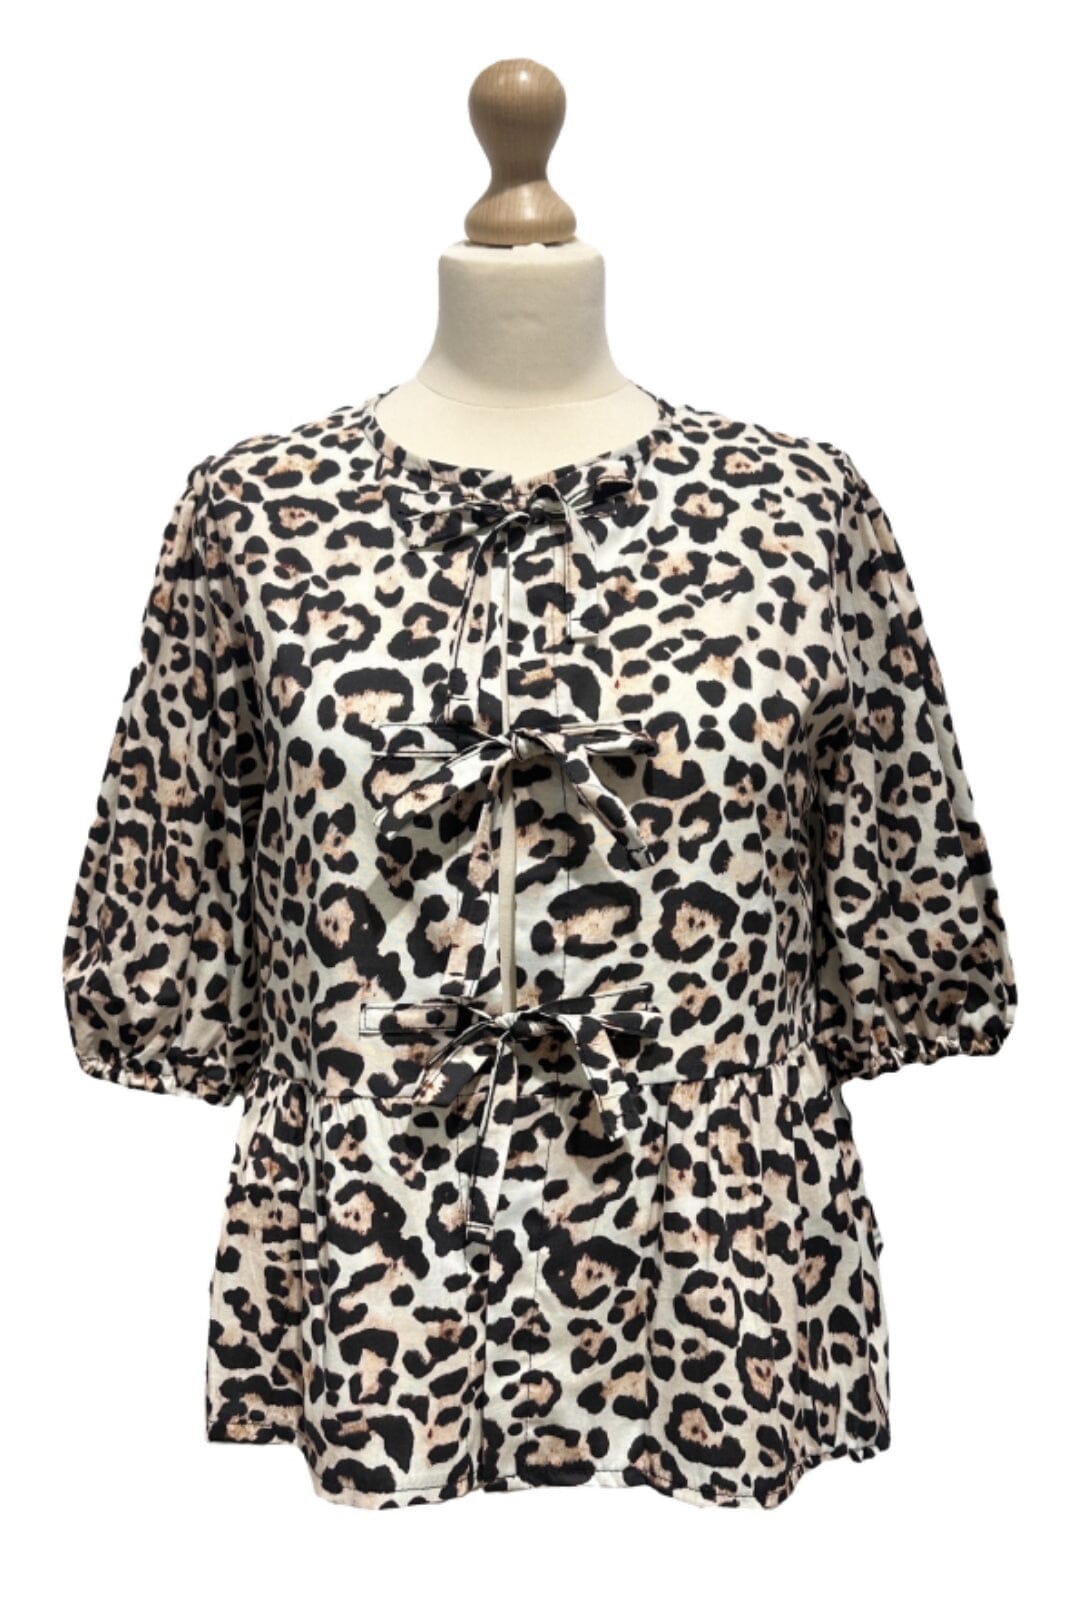 A-bee - Top Leopard knots 12775LO - Animals T-shirts 